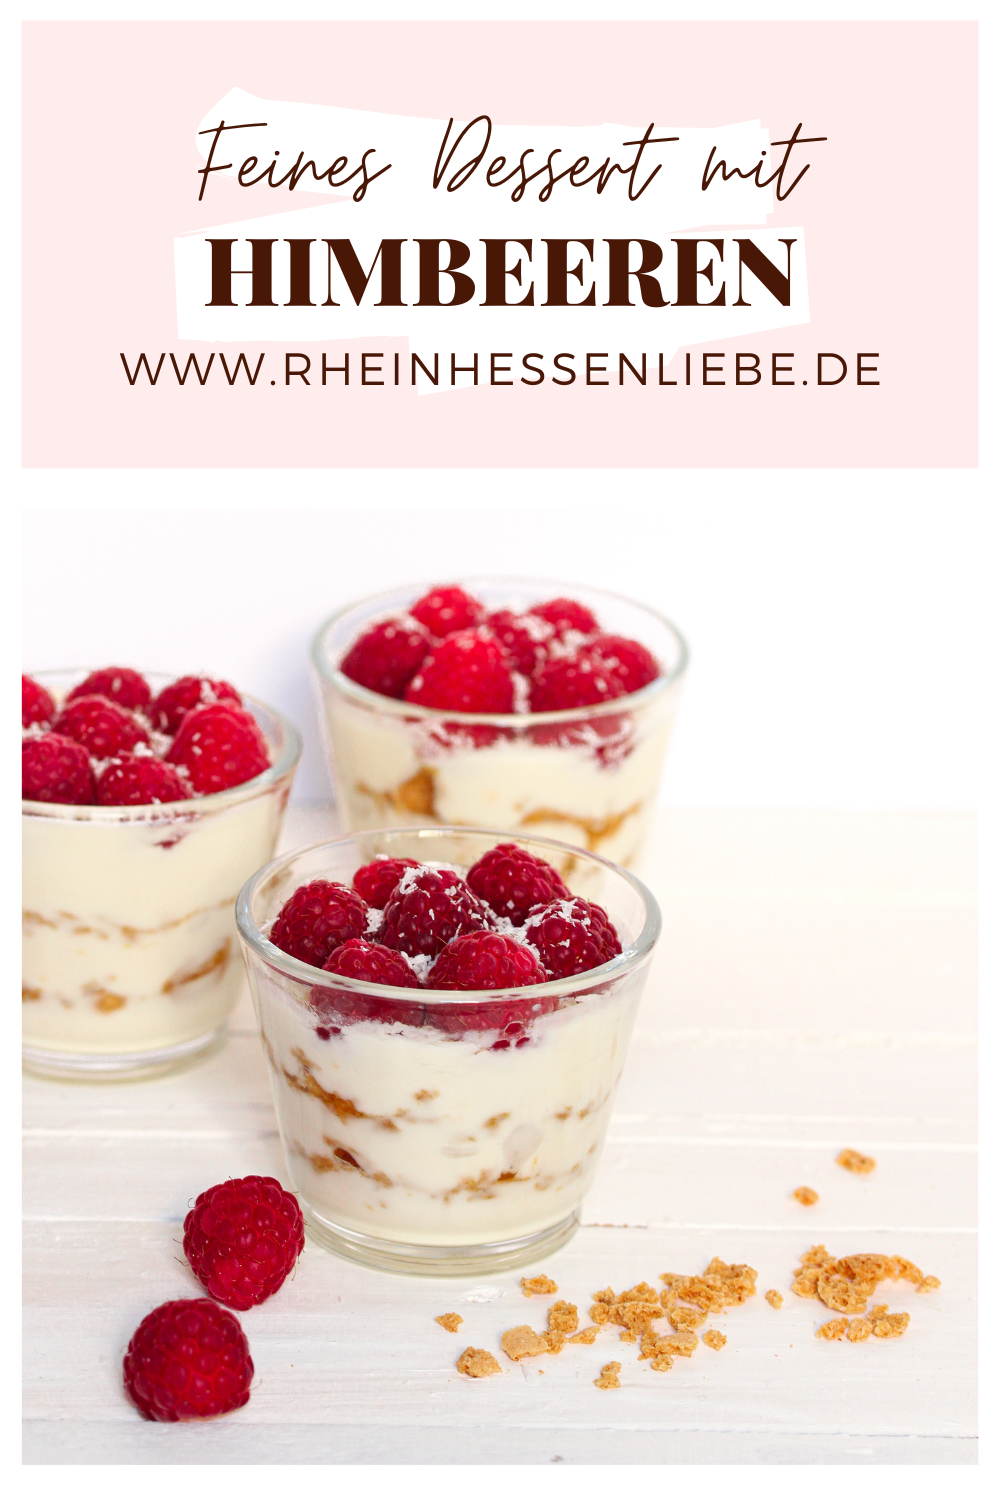 Himbeer-Dessert im Glas 